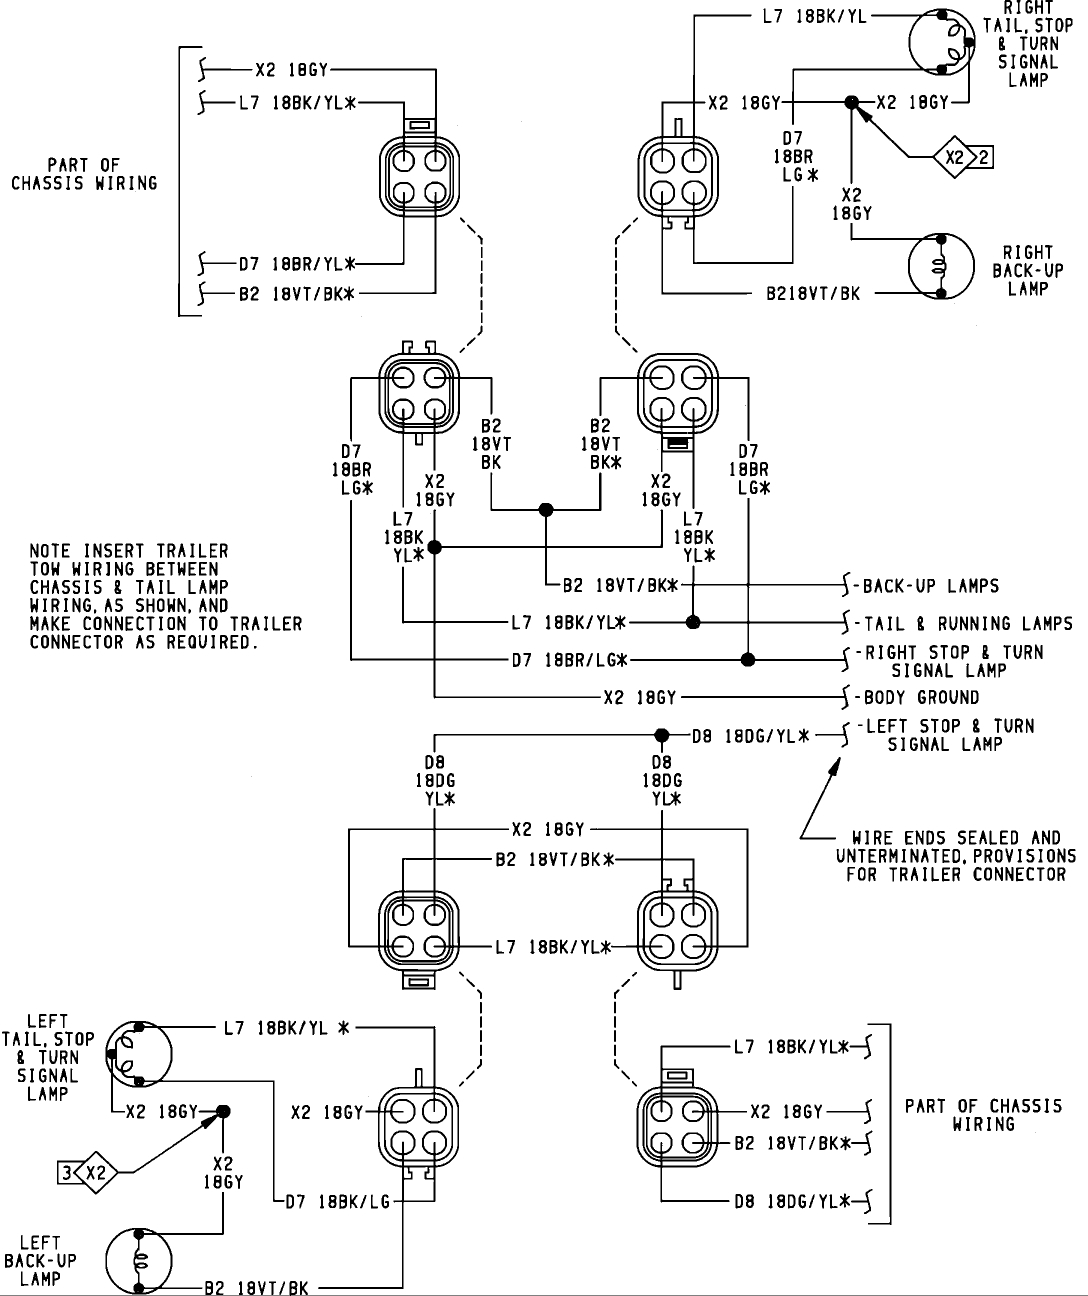 Trailer Harness Wiring Diagram - 2002 F250 Trailer Wiring Harness | schematic and wiring diagram 2002 Ford F250 Trailer Wiring Harness Diagram